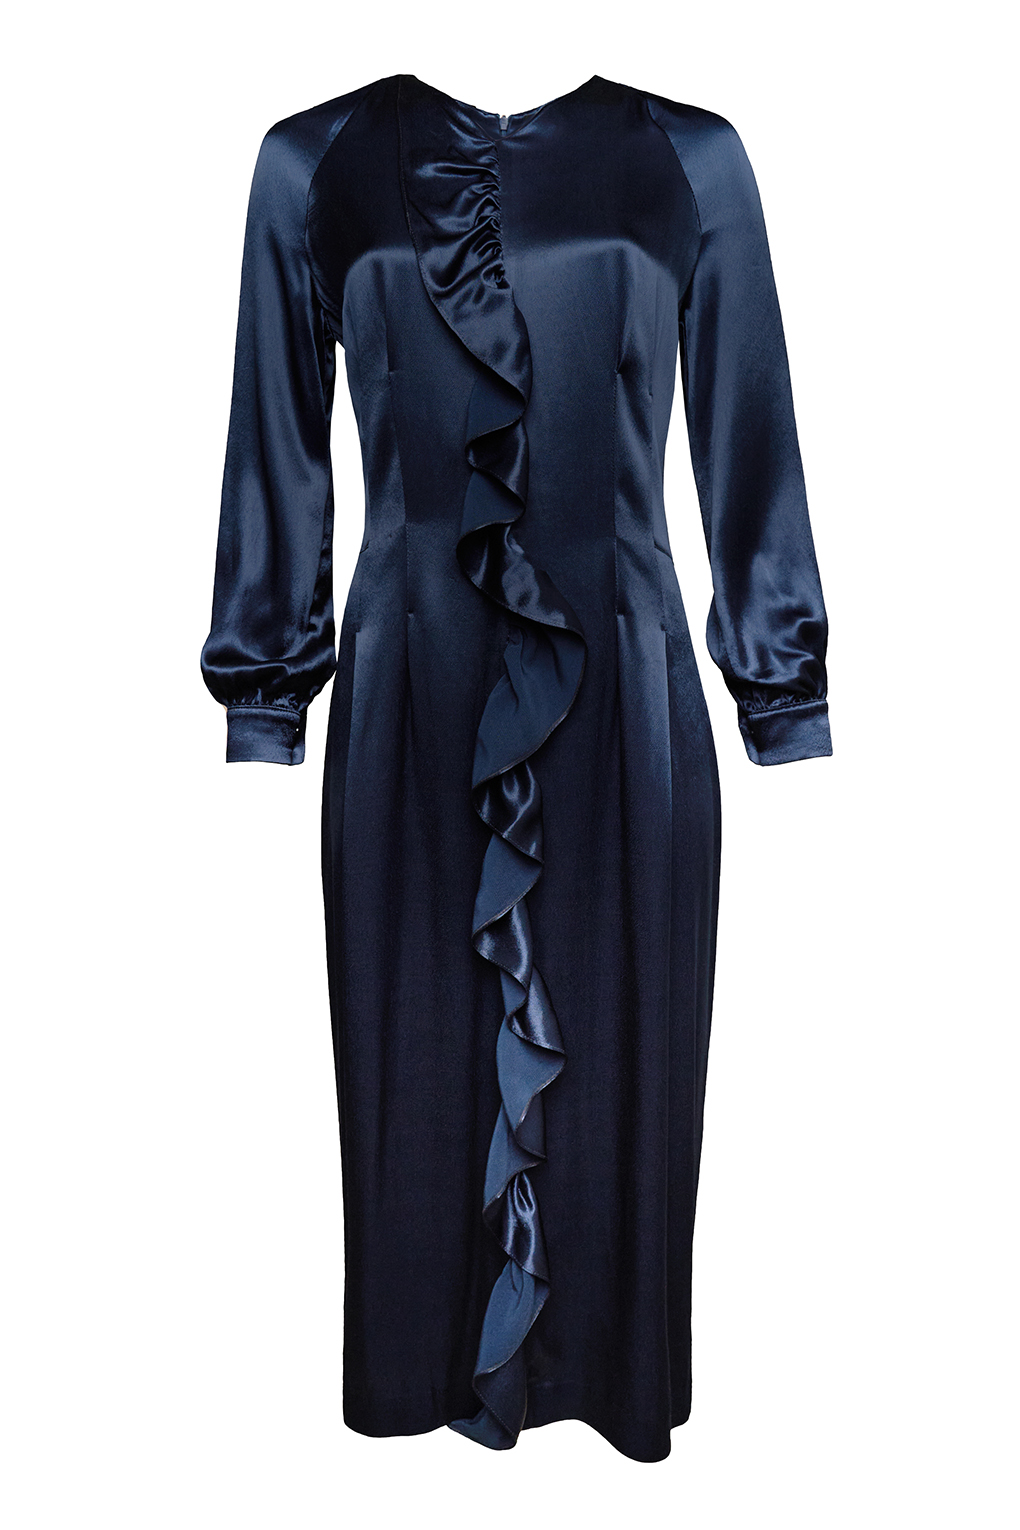 фото Платье женское paola ray pr120-3068 синее m